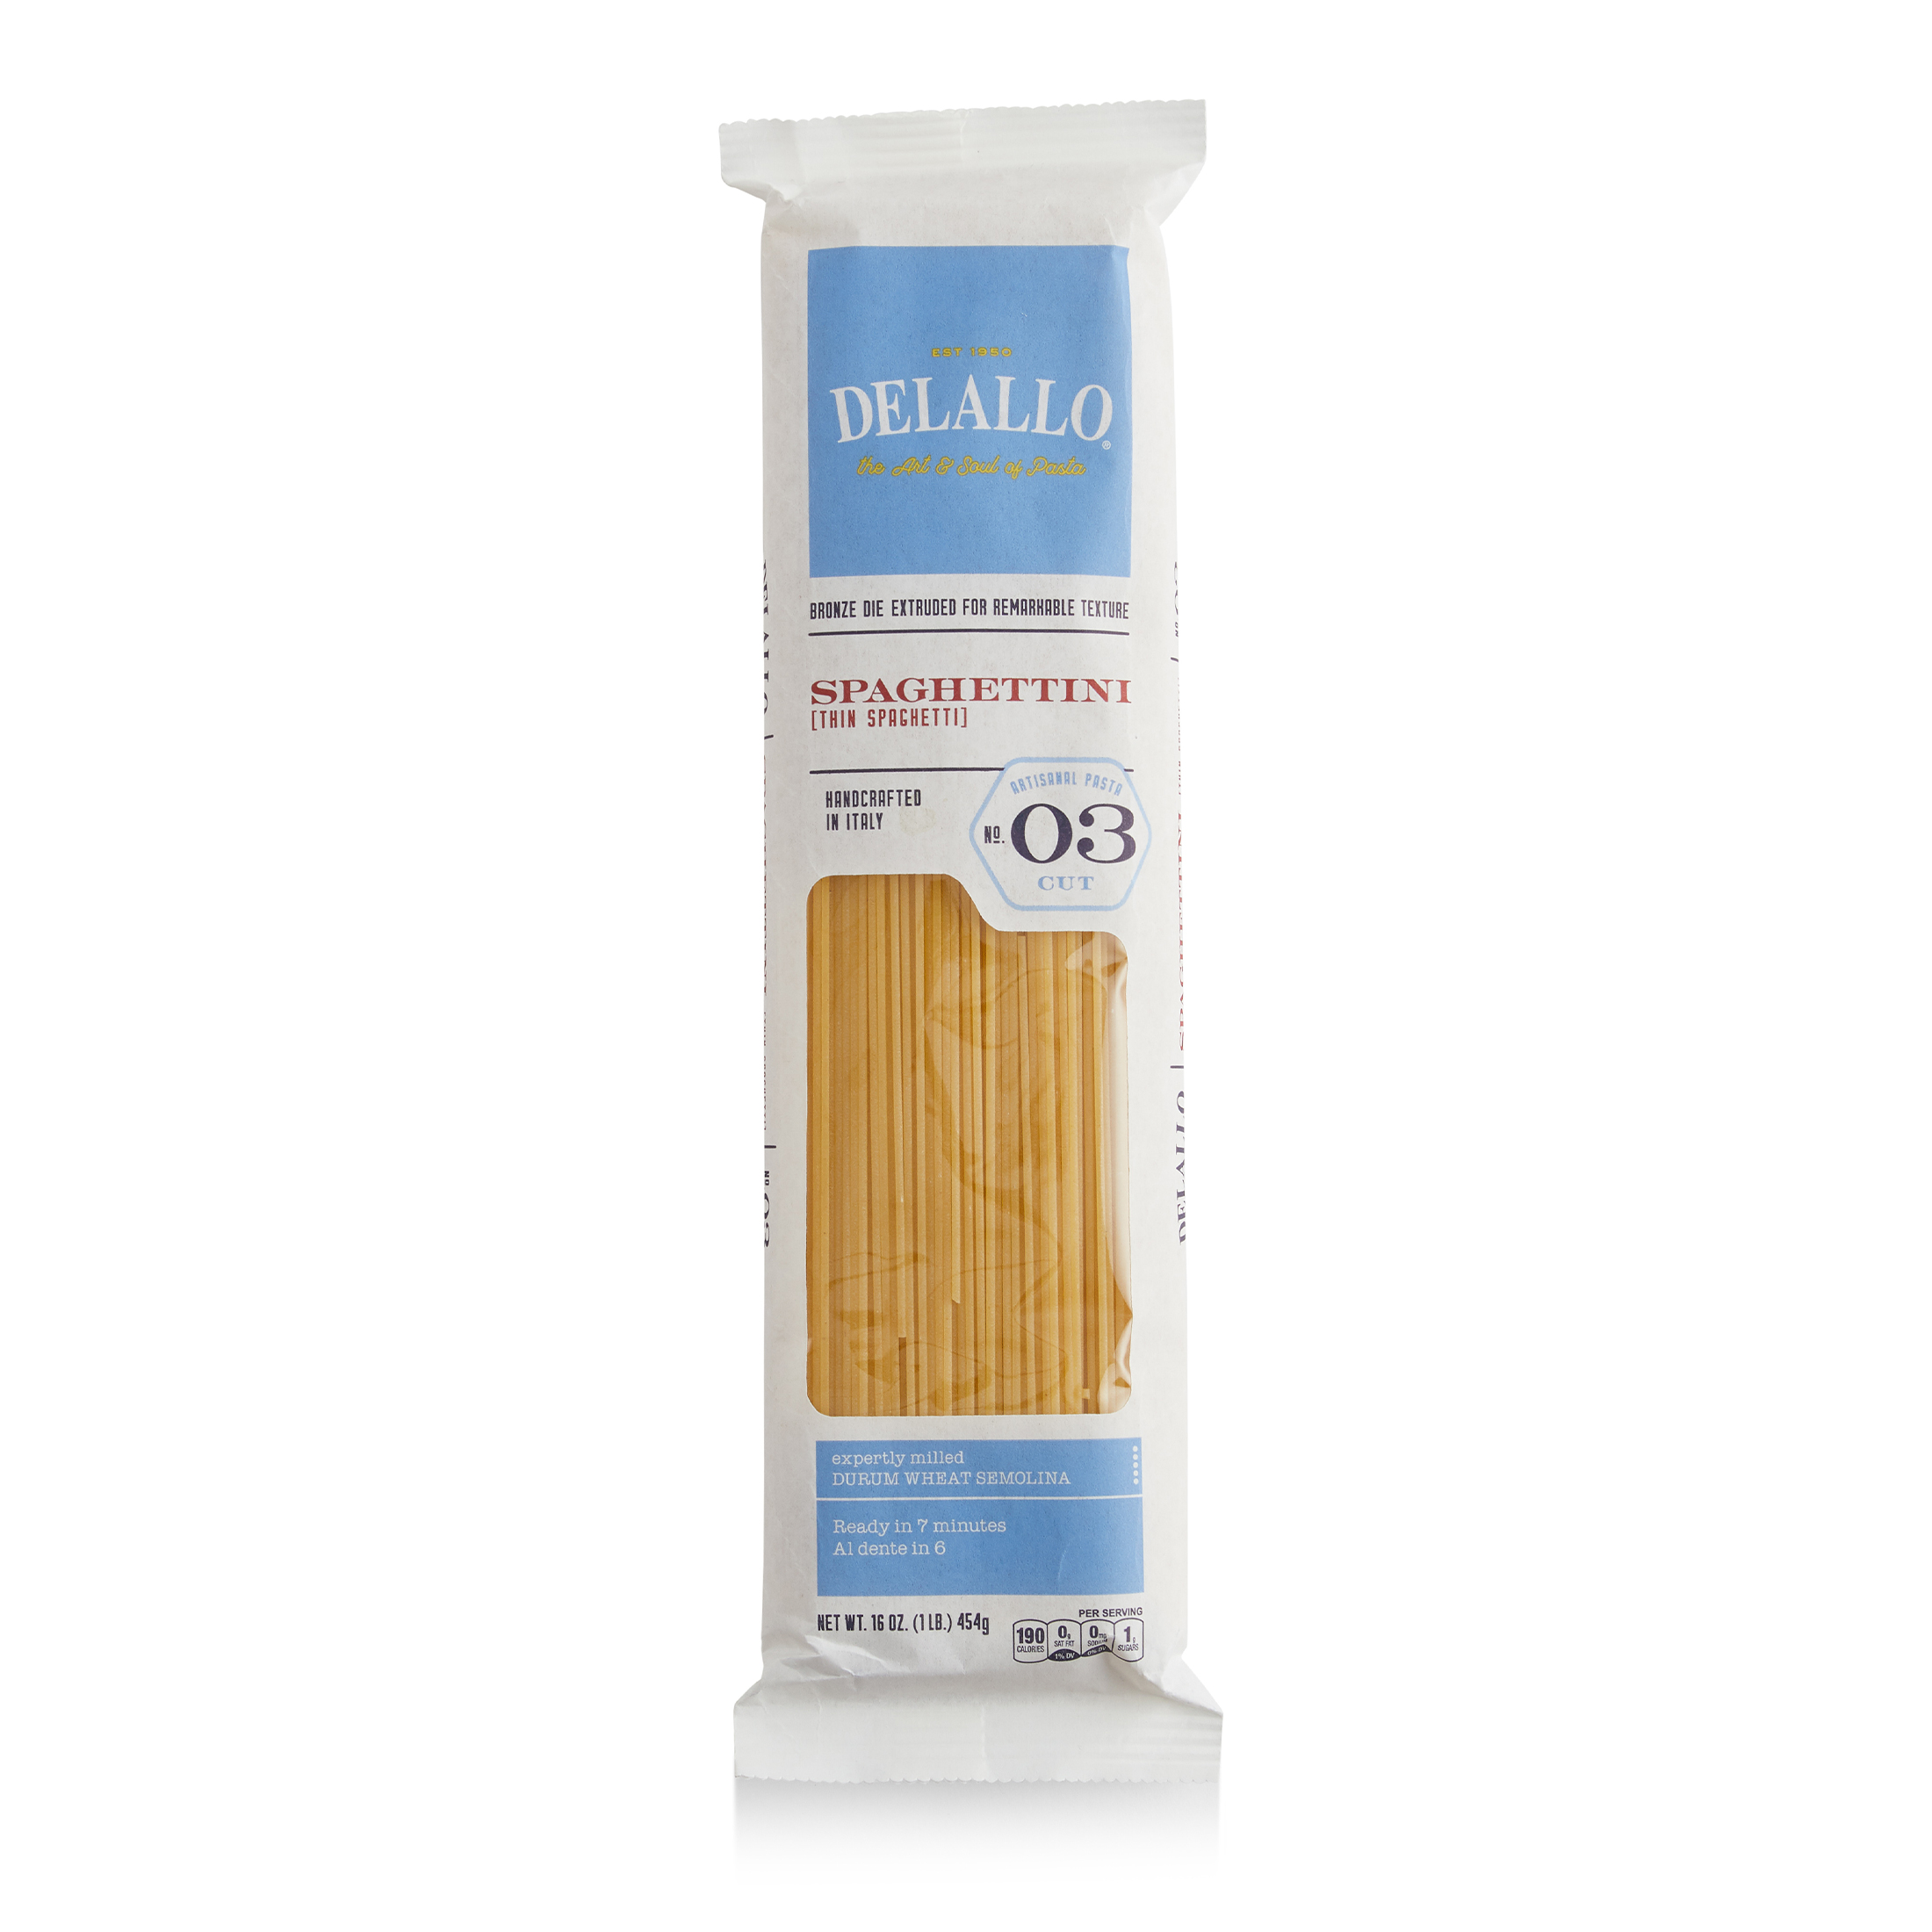 Spaghetti Pasta Product & Nutrition